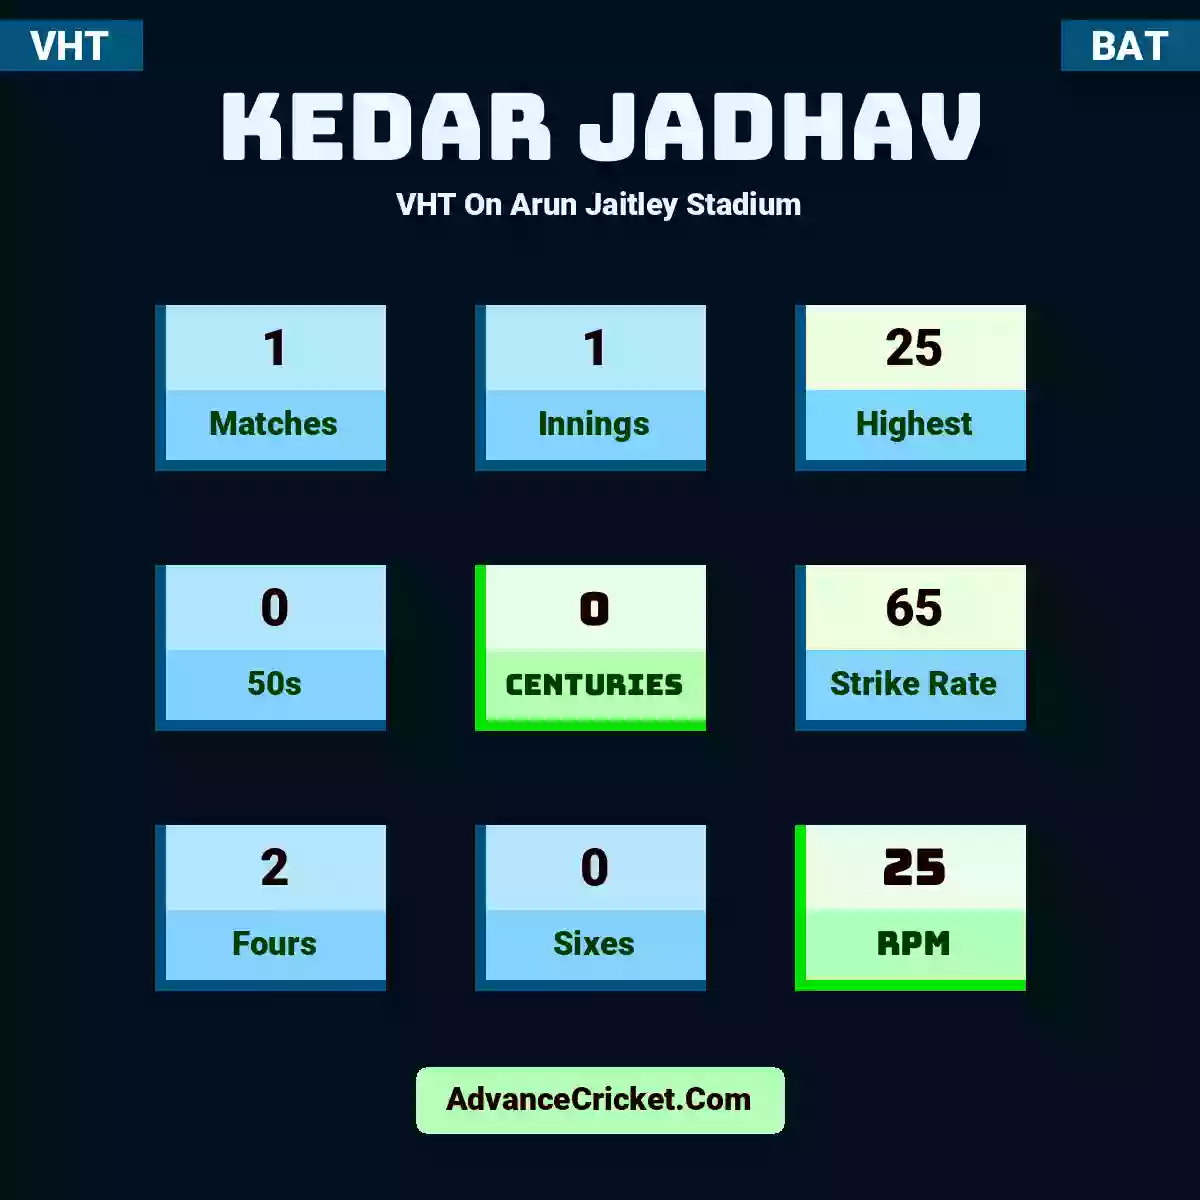 Kedar Jadhav VHT  On Arun Jaitley Stadium, Kedar Jadhav played 1 matches, scored 25 runs as highest, 0 half-centuries, and 0 centuries, with a strike rate of 65. K.Jadhav hit 2 fours and 0 sixes, with an RPM of 25.